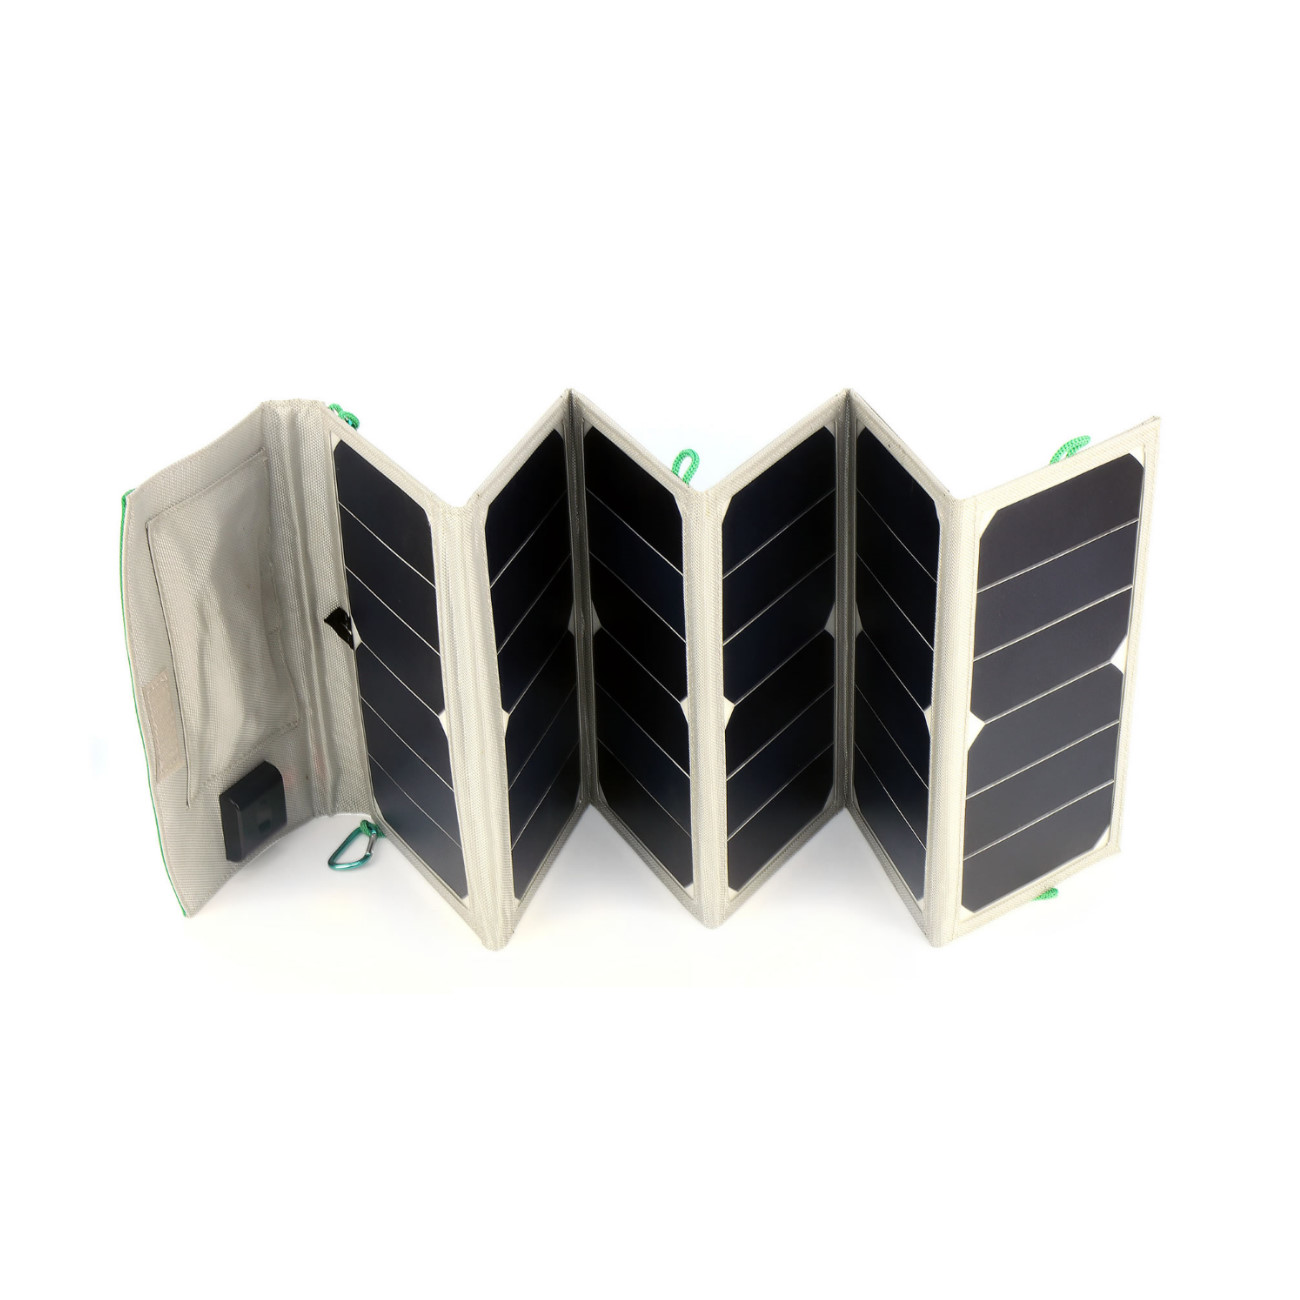 Medistrom Solar Ladegerät | Solar Charger | für Pilot-24 lite Akku